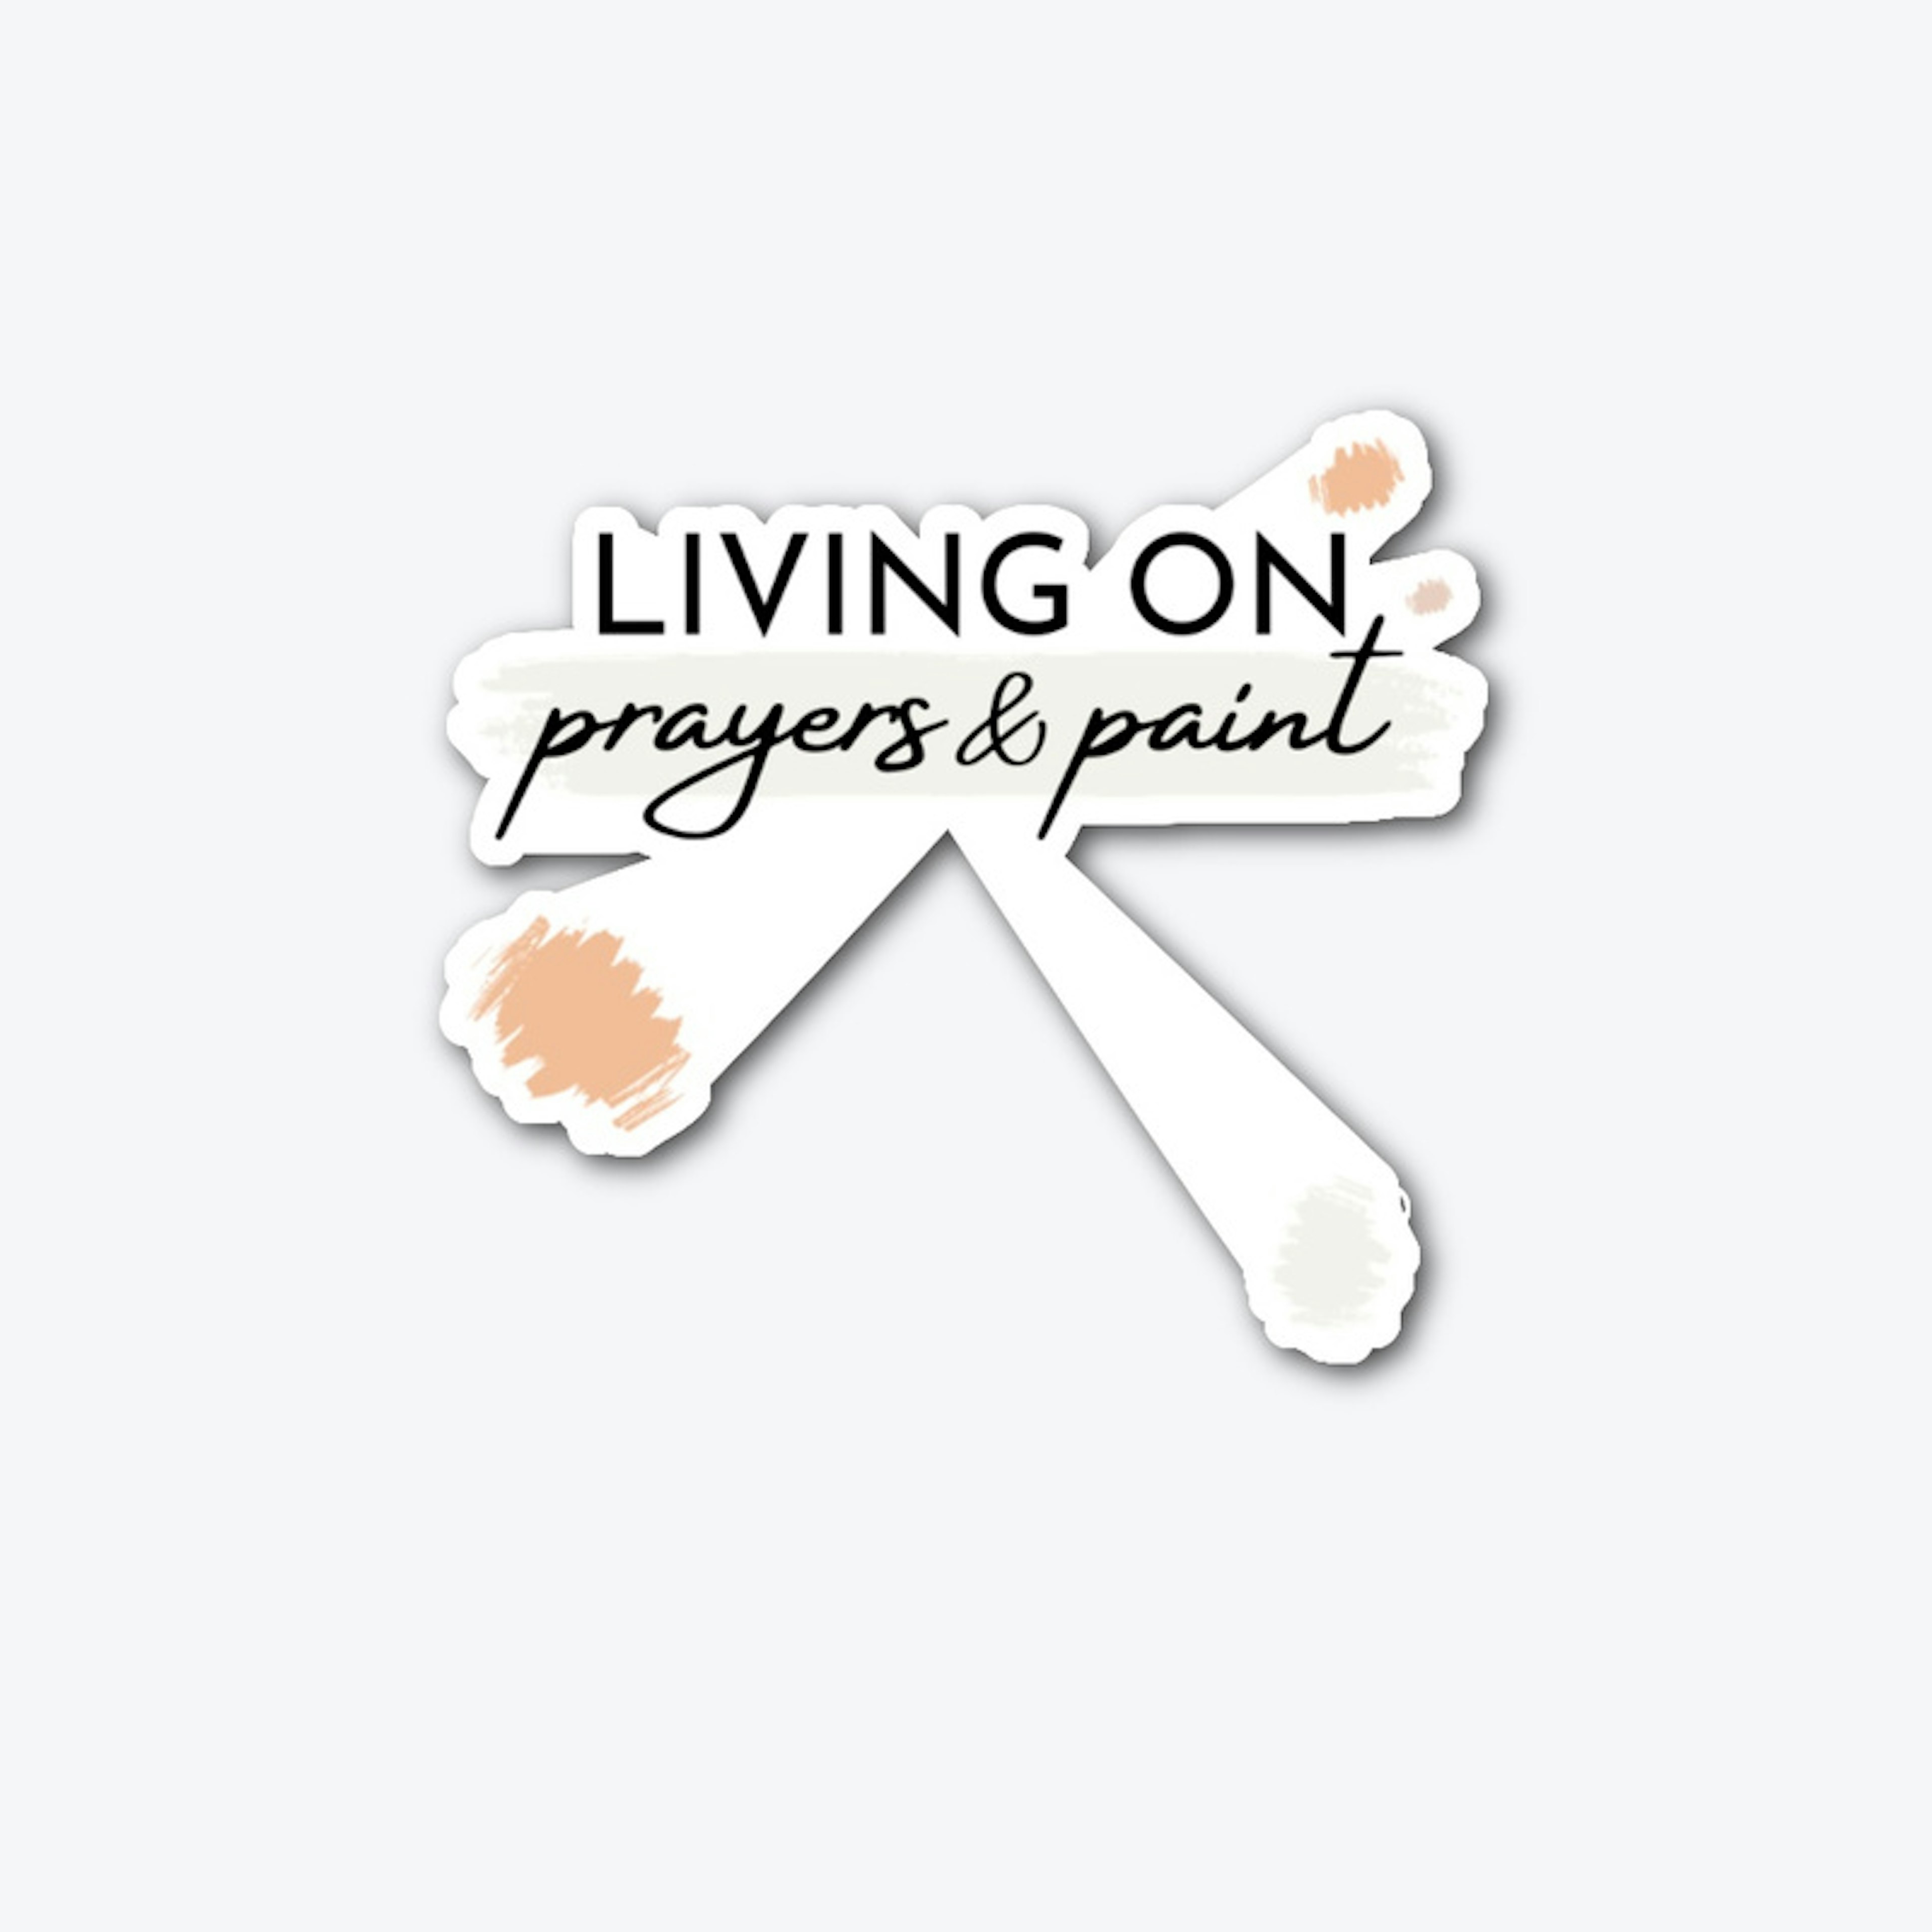 Living on: prayers & paint